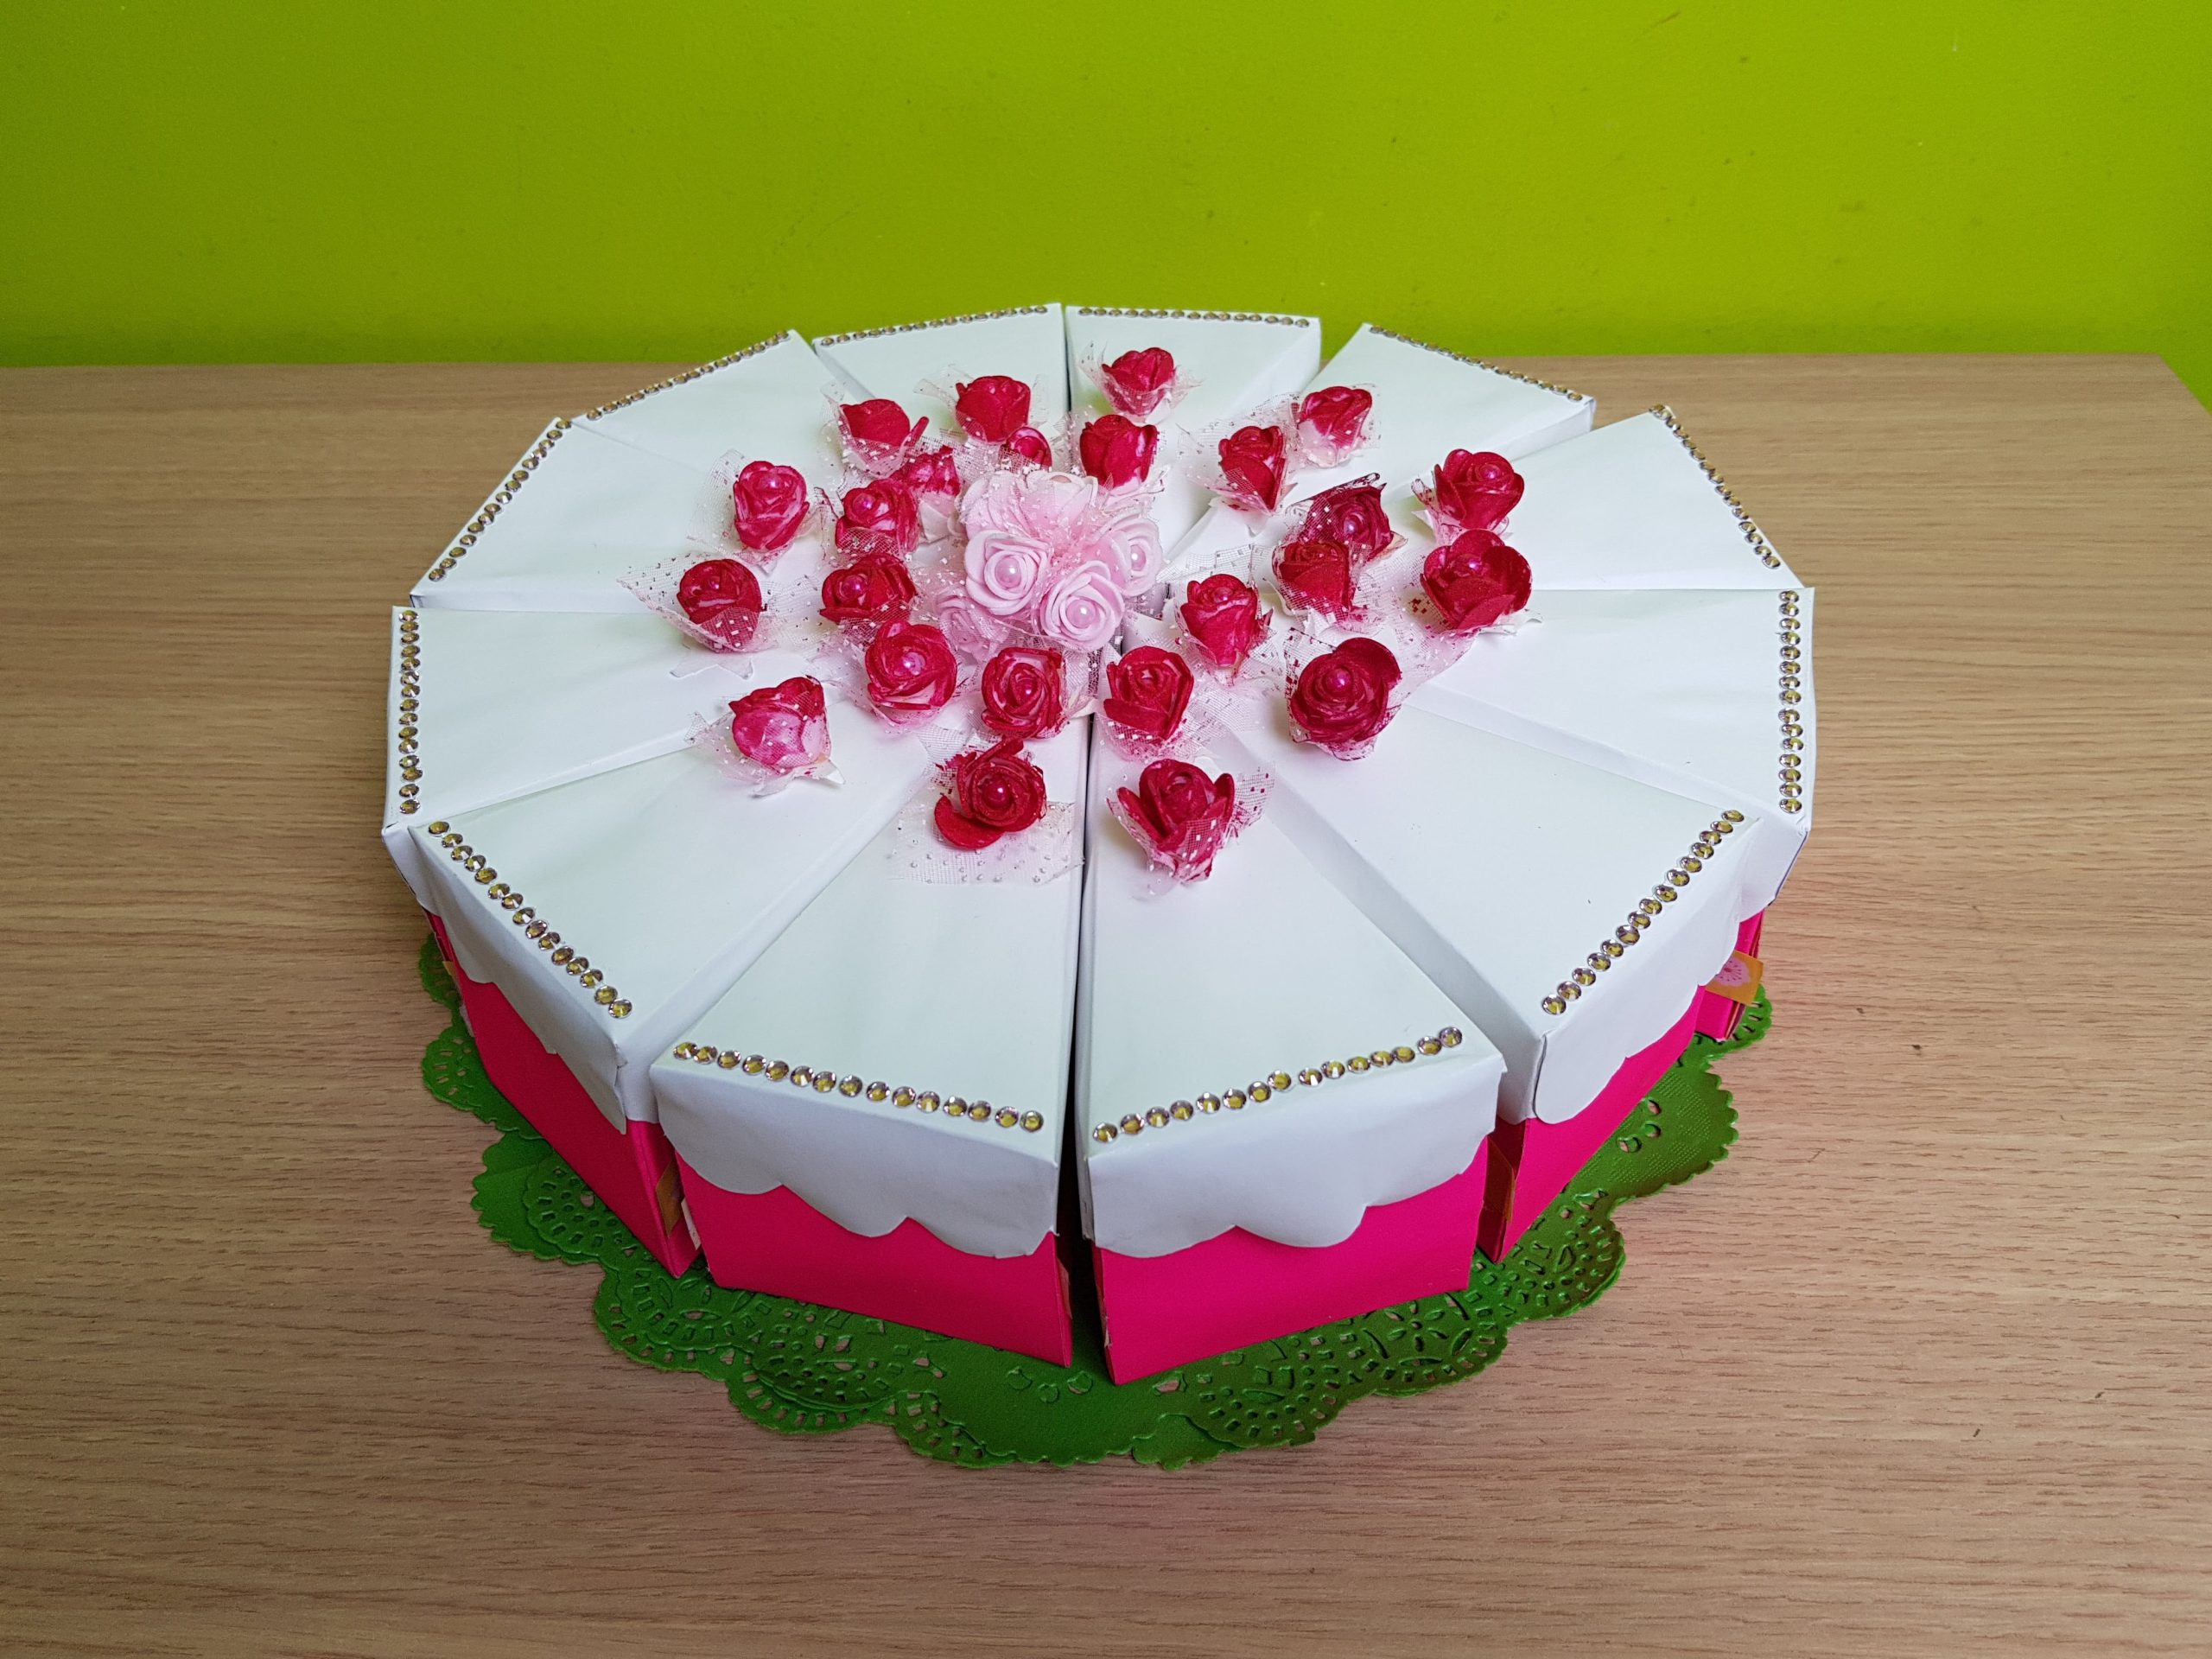 TORTA BOMBONIERA SLICE OF CAKE BOX TUTORIAL DIY